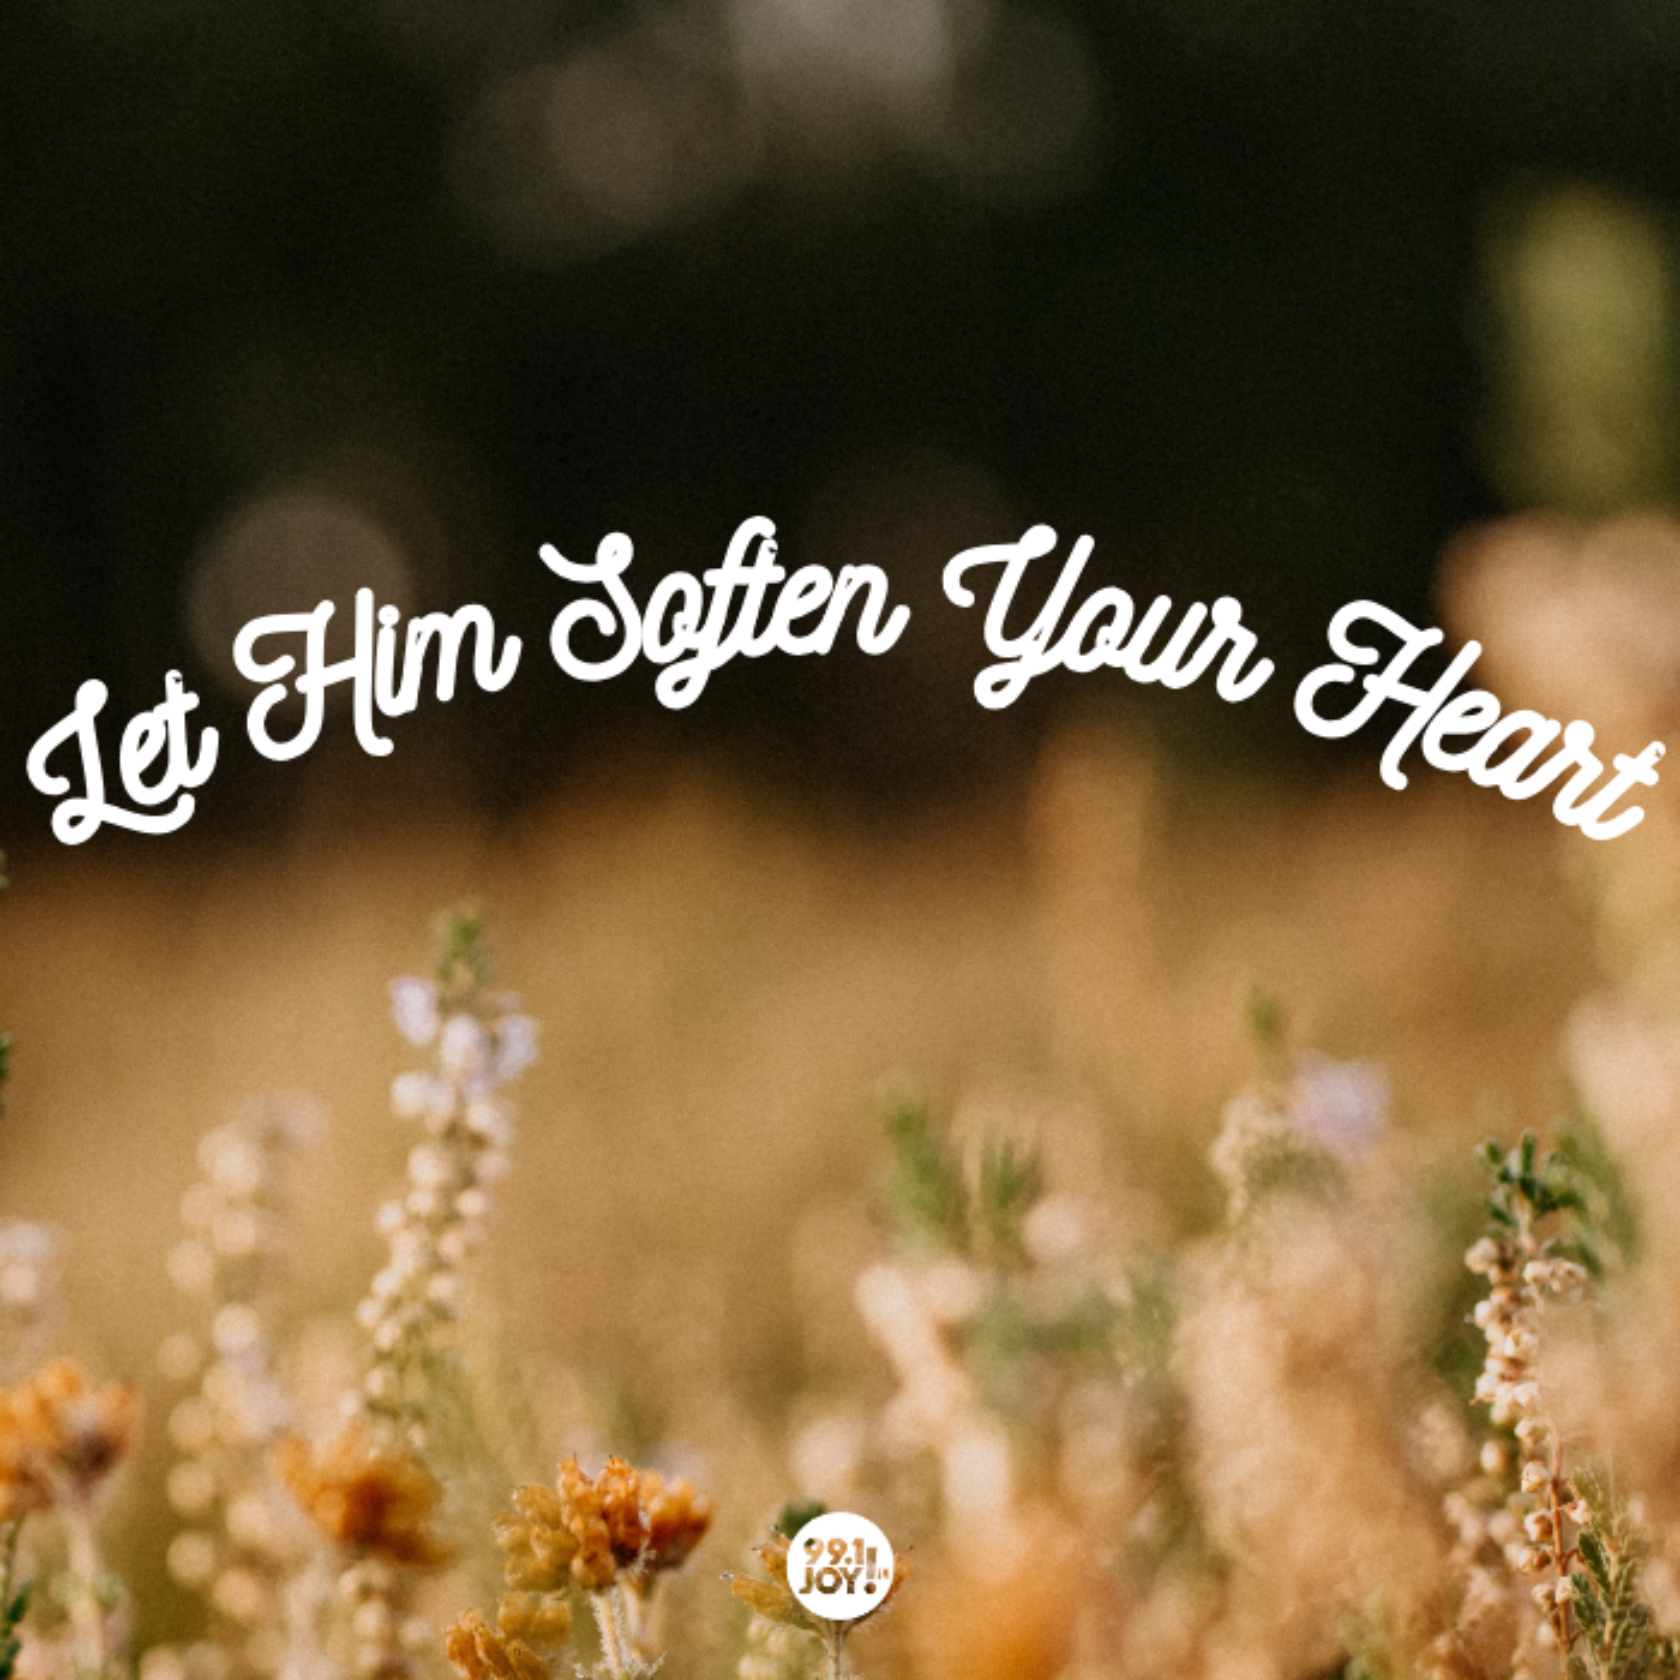 Let Him Soften Your Heart